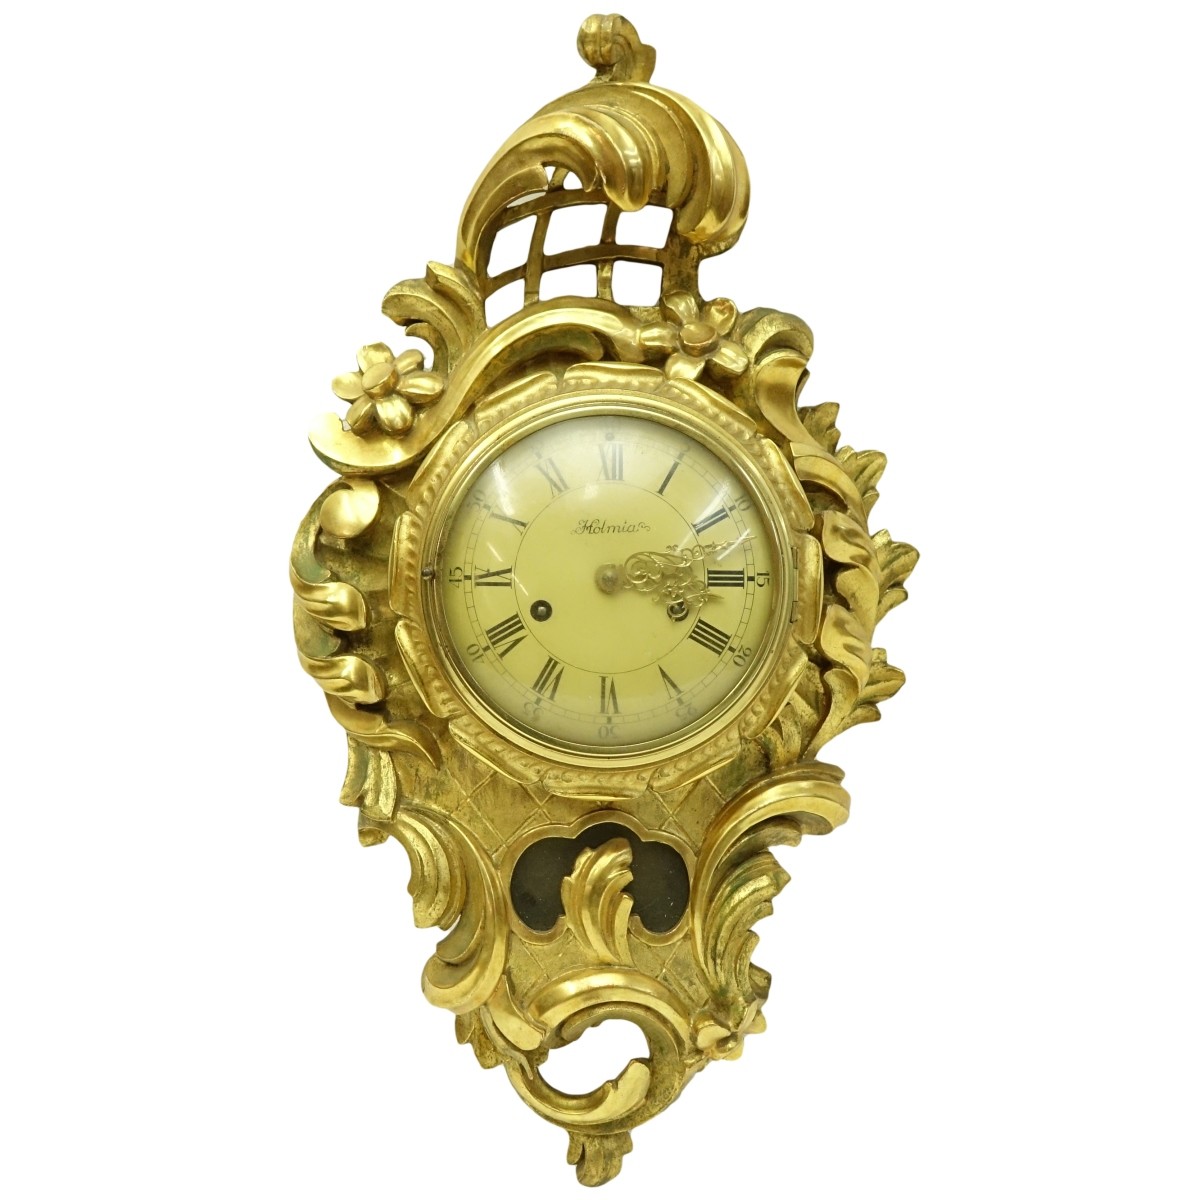 Holmia Swedish Rococo Style Giltwood Cartel clock